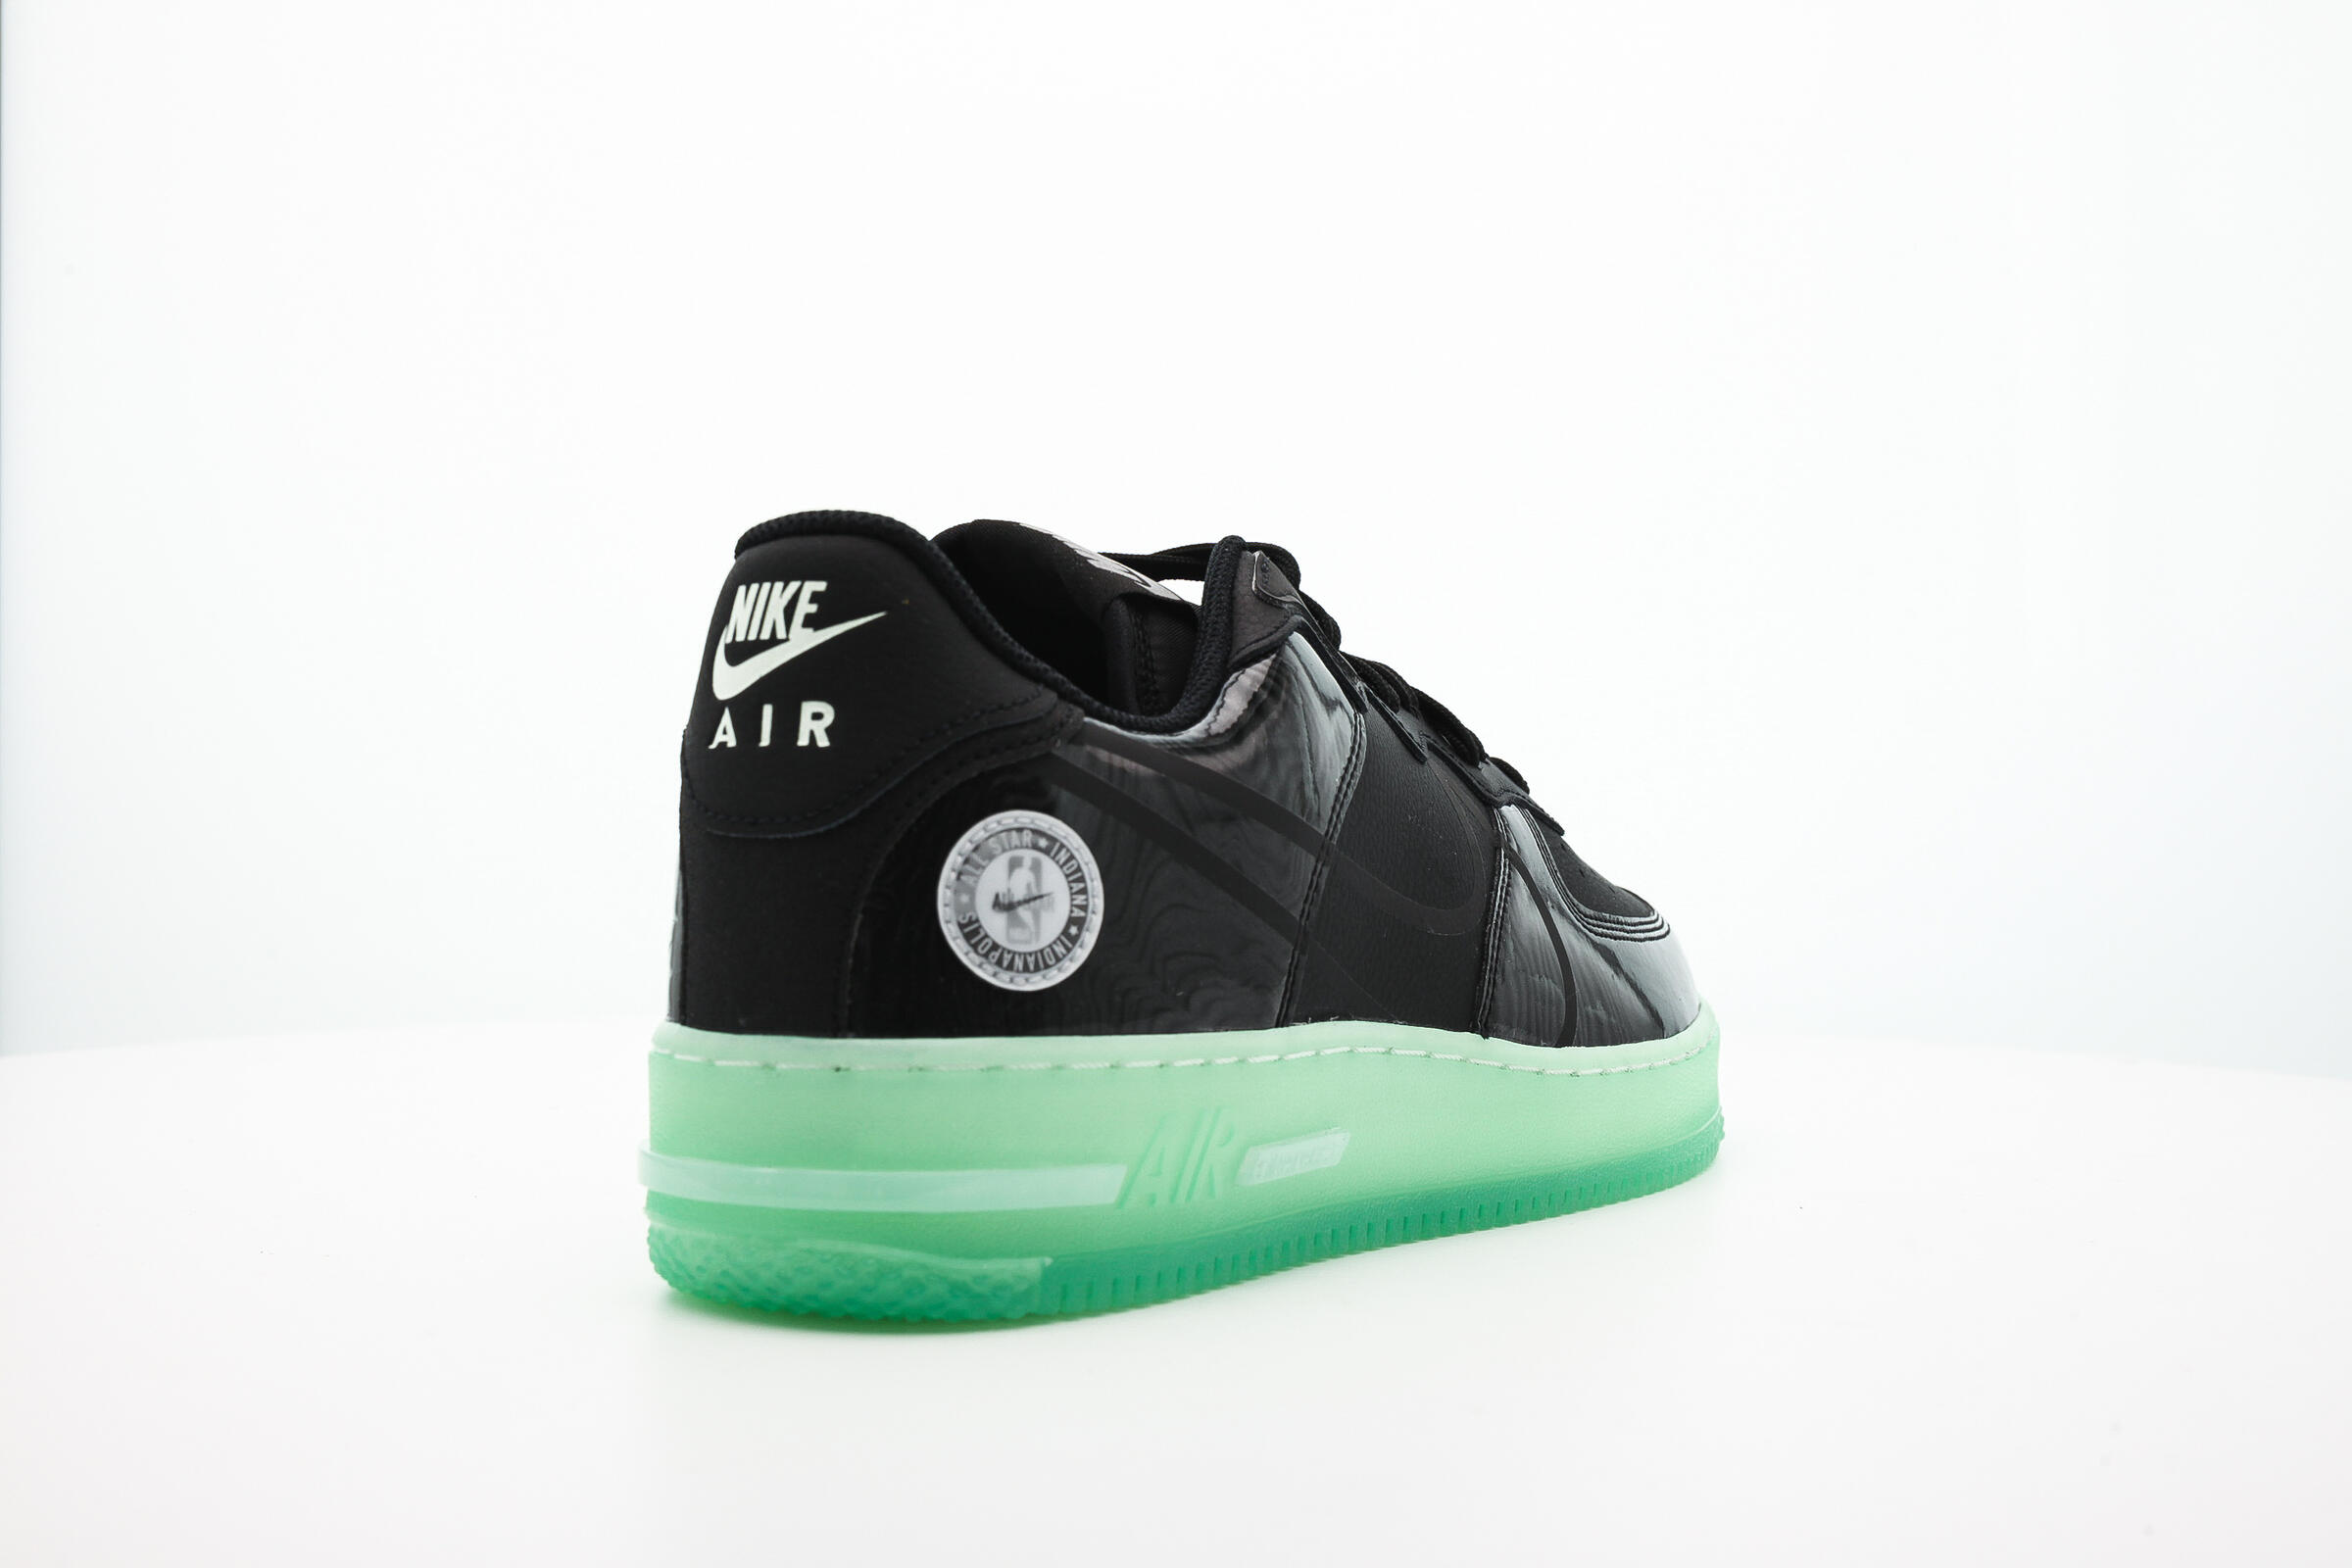 Nike AIR FORCE 1 REACT LV8 "ALL STAR"